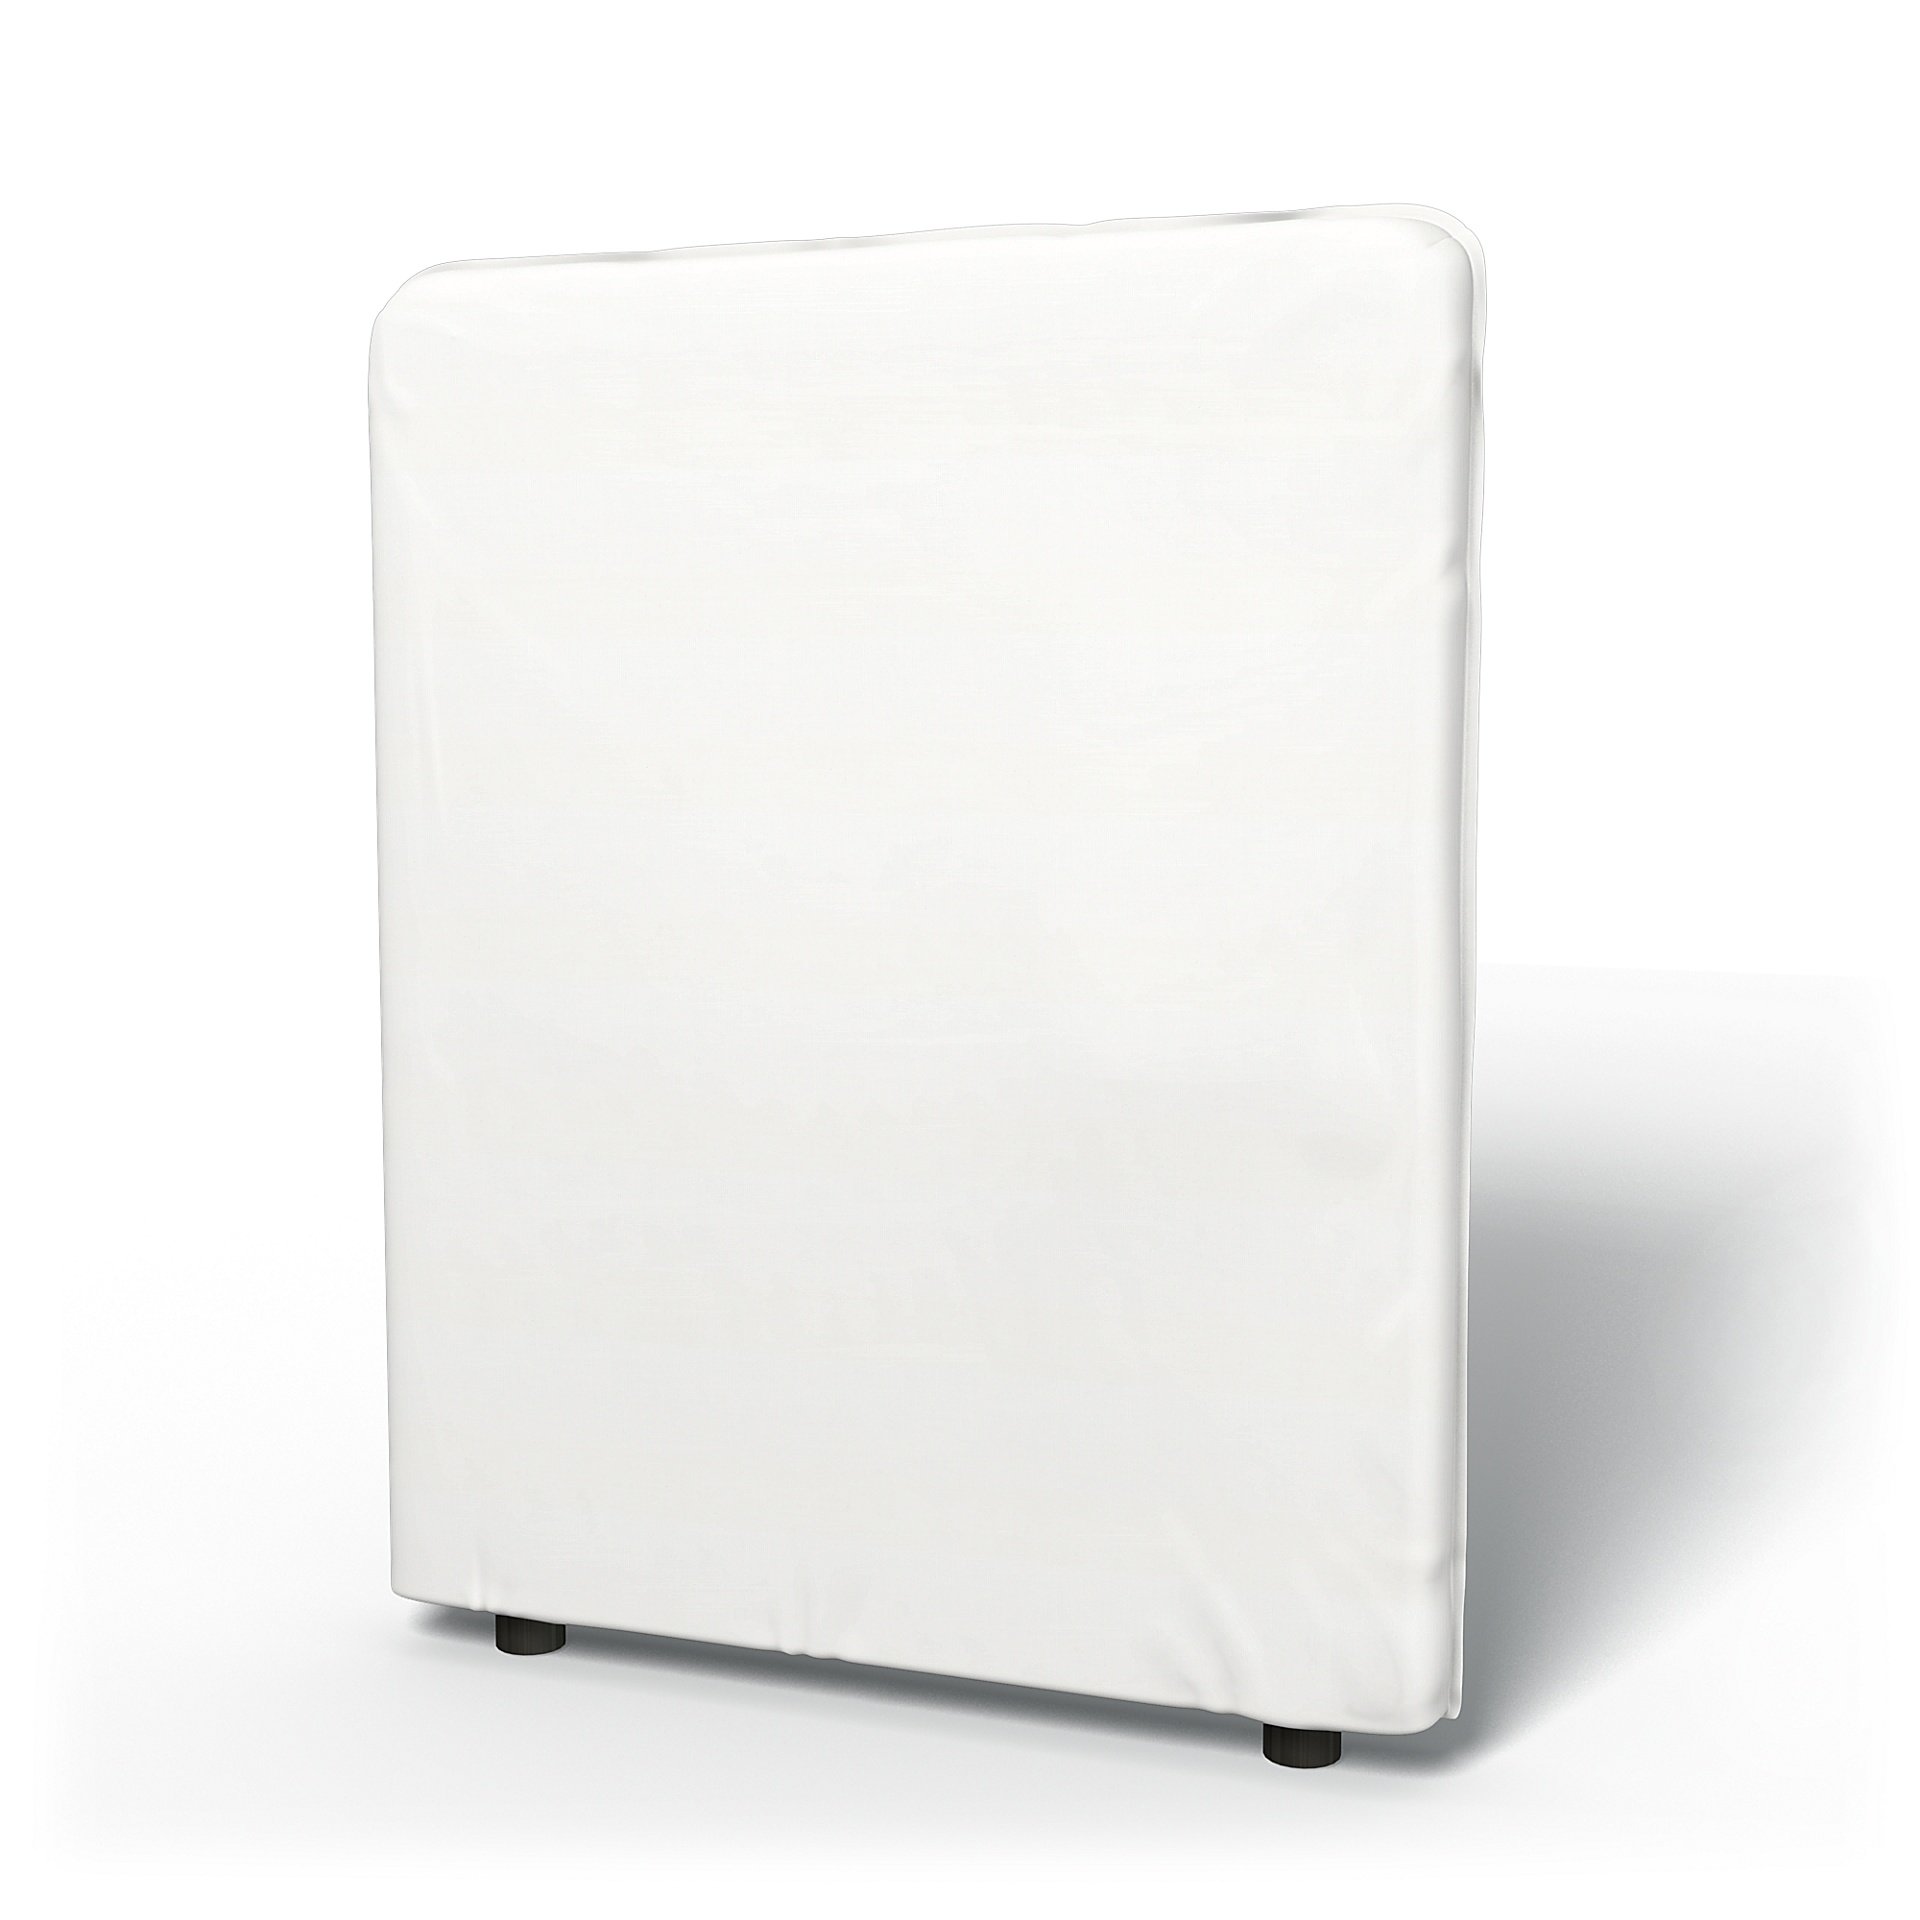 IKEA - Vallentuna High Backrest Cover 80x100cm 32x39in, Absolute White, Linen - Bemz